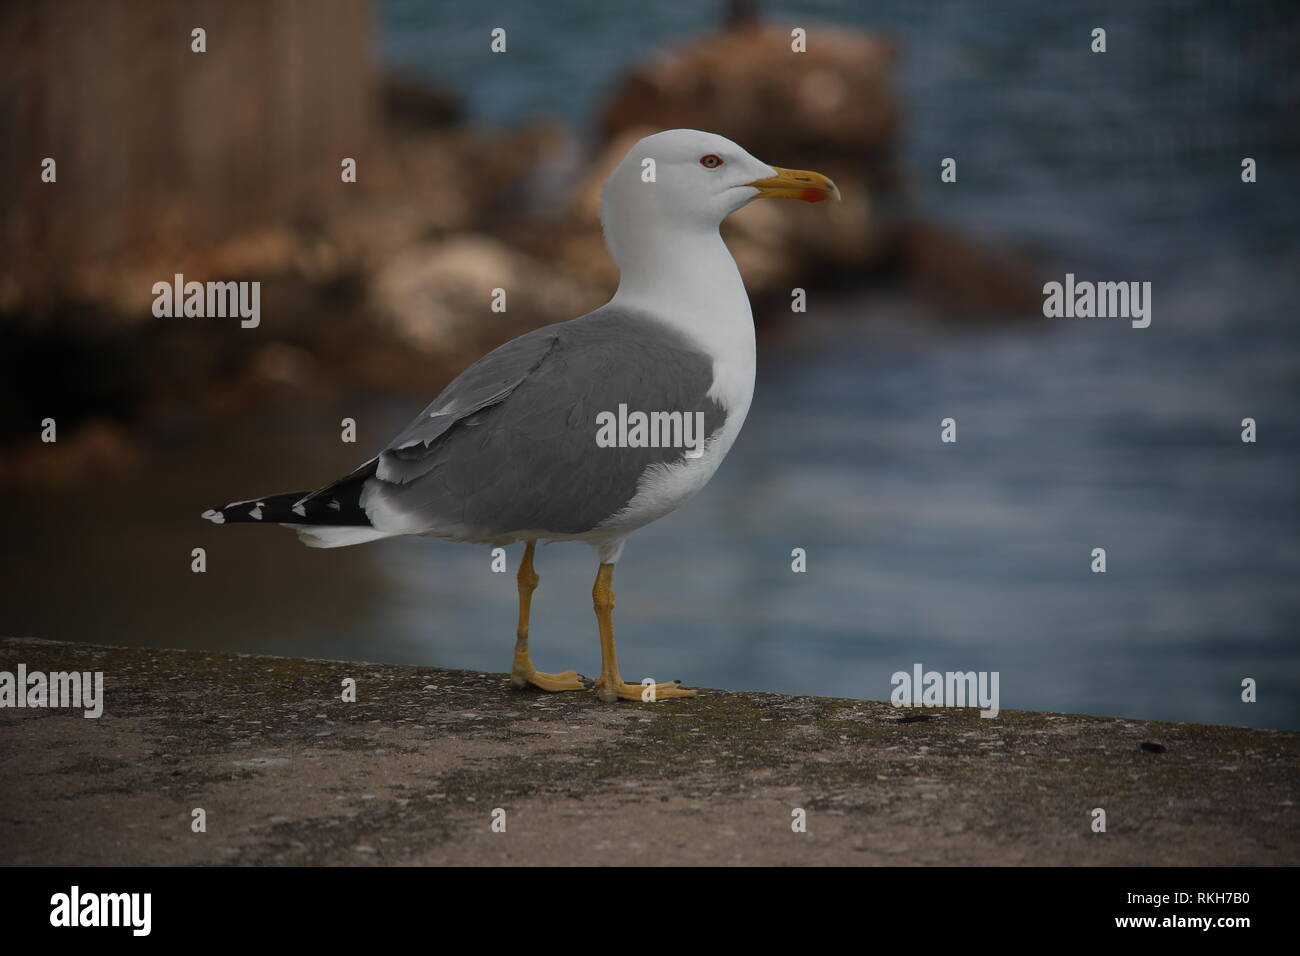 Atlantic Islands Gull (Larus cachinnans atlantis) at Portimao, Portugal Stock Photo